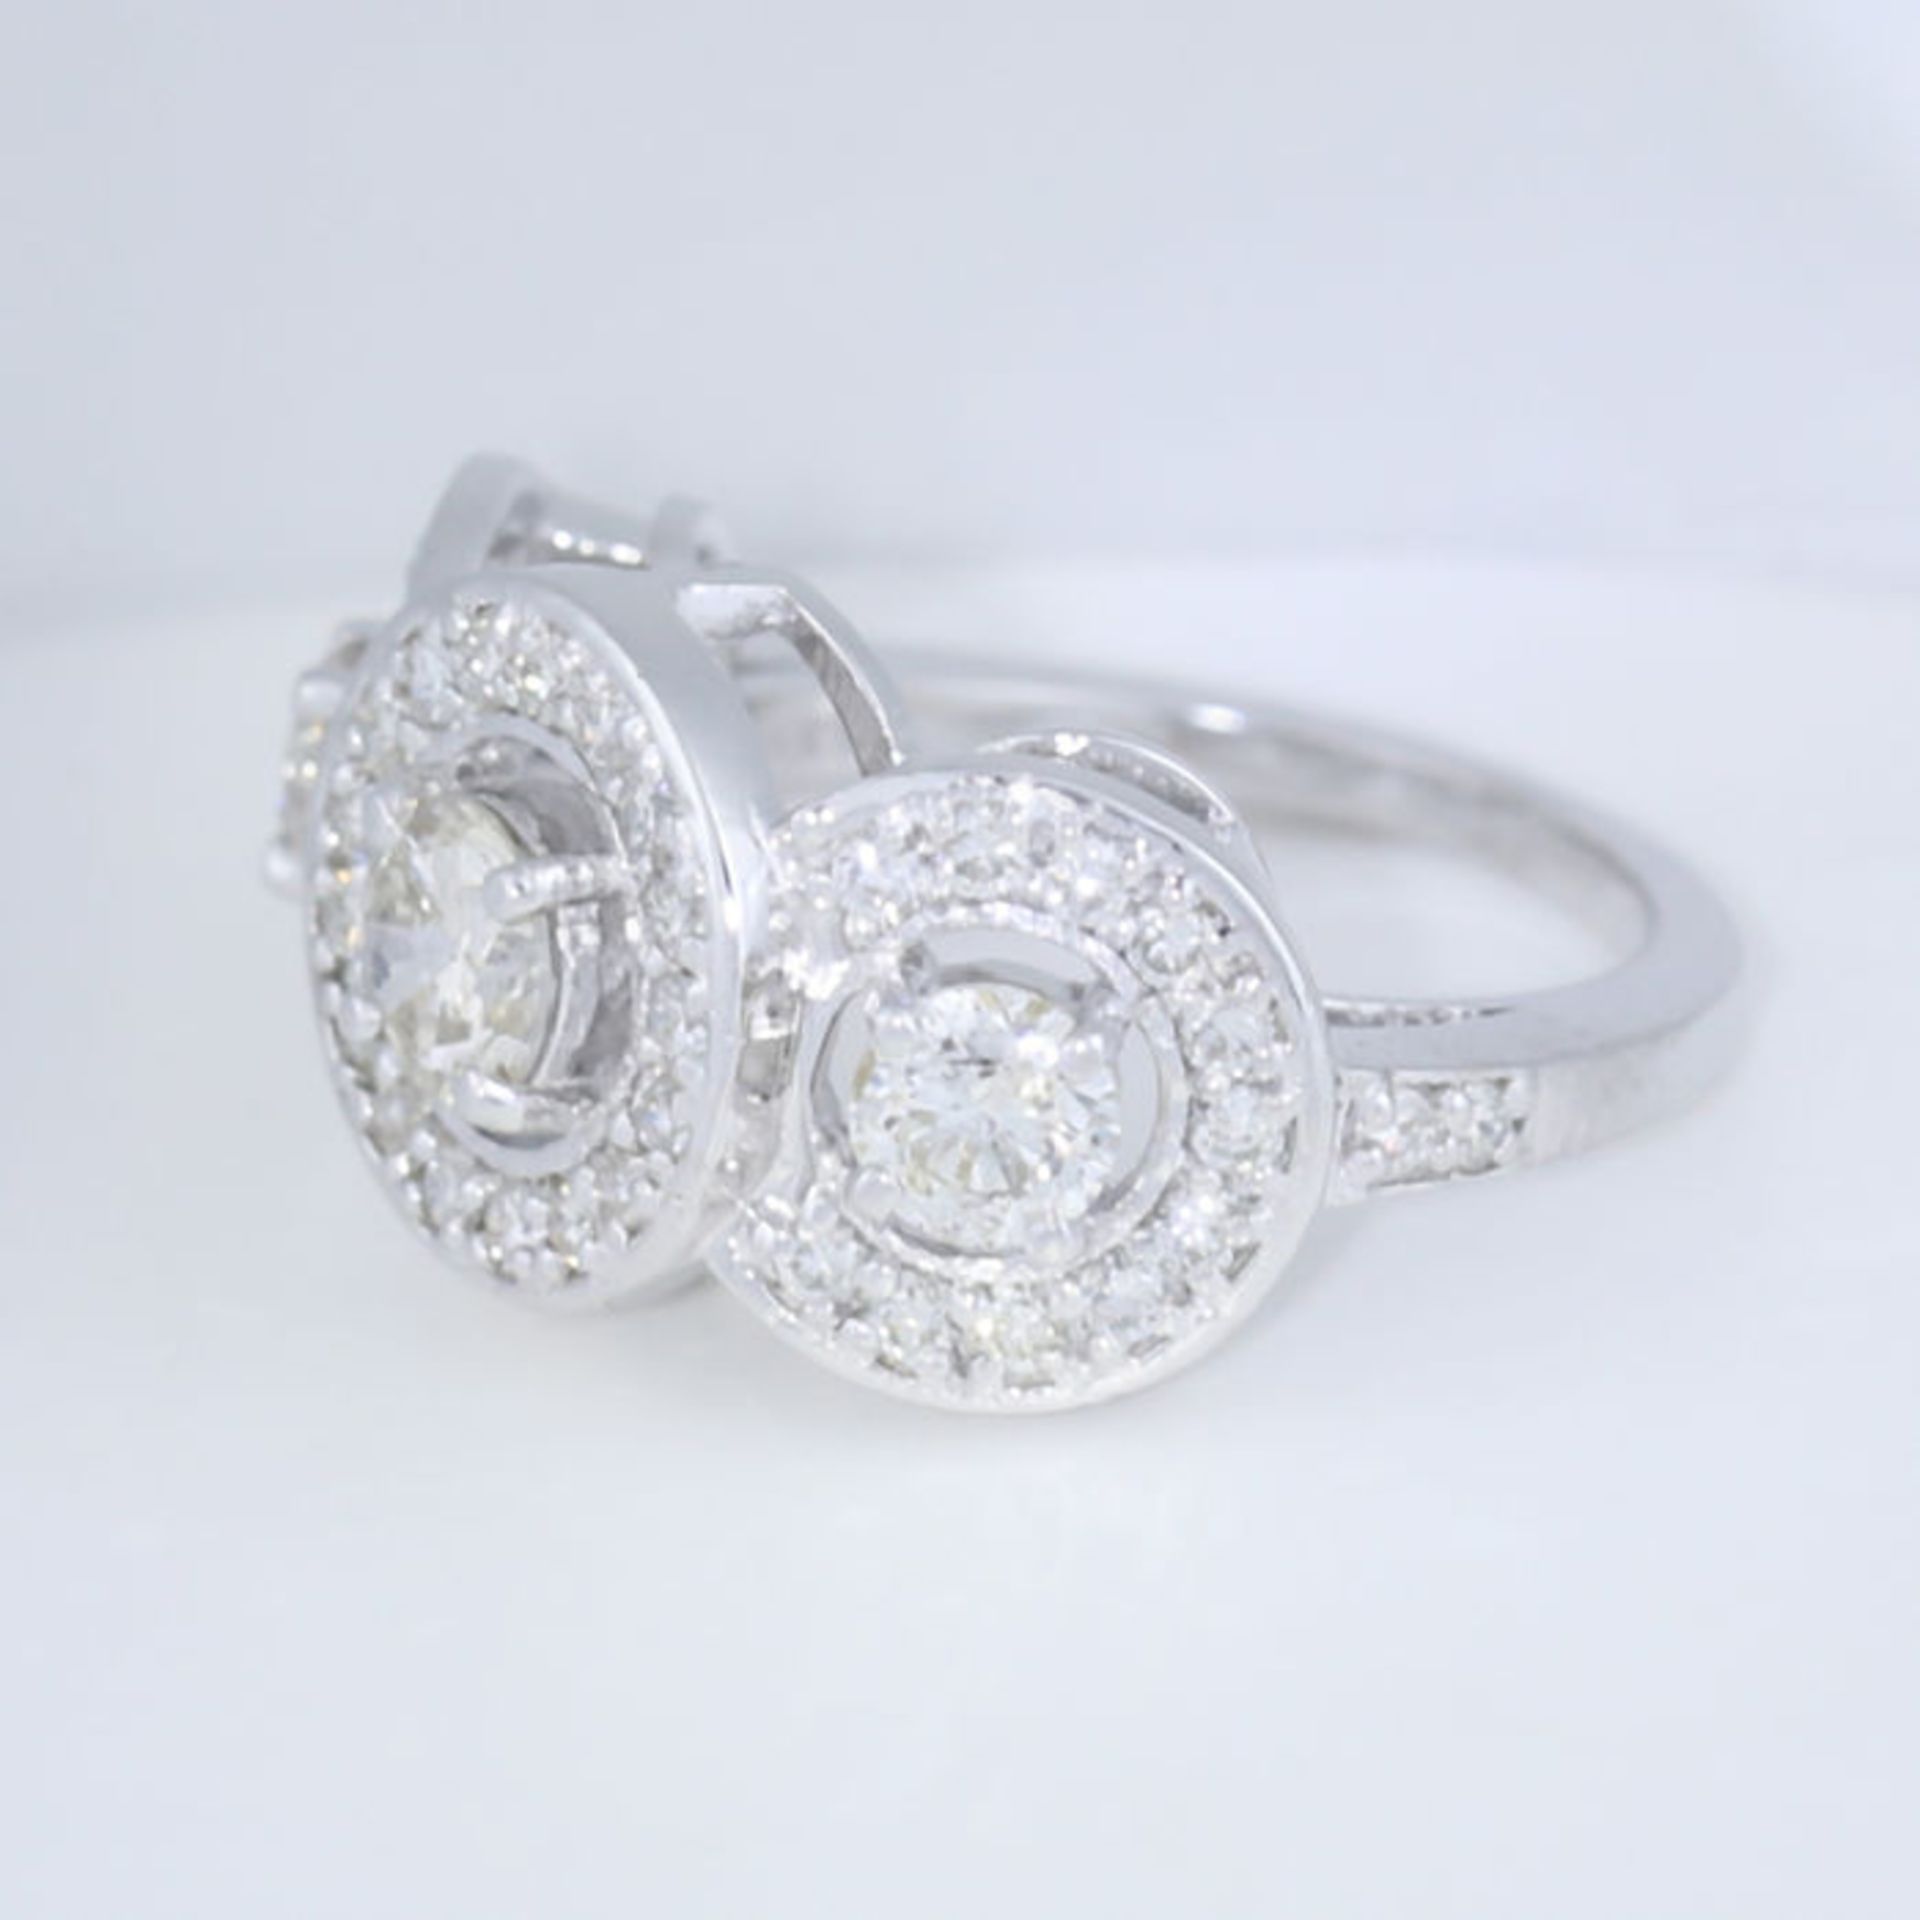 14 K / 585 Designer 3 Solitaire Diamond Ring - Image 4 of 7